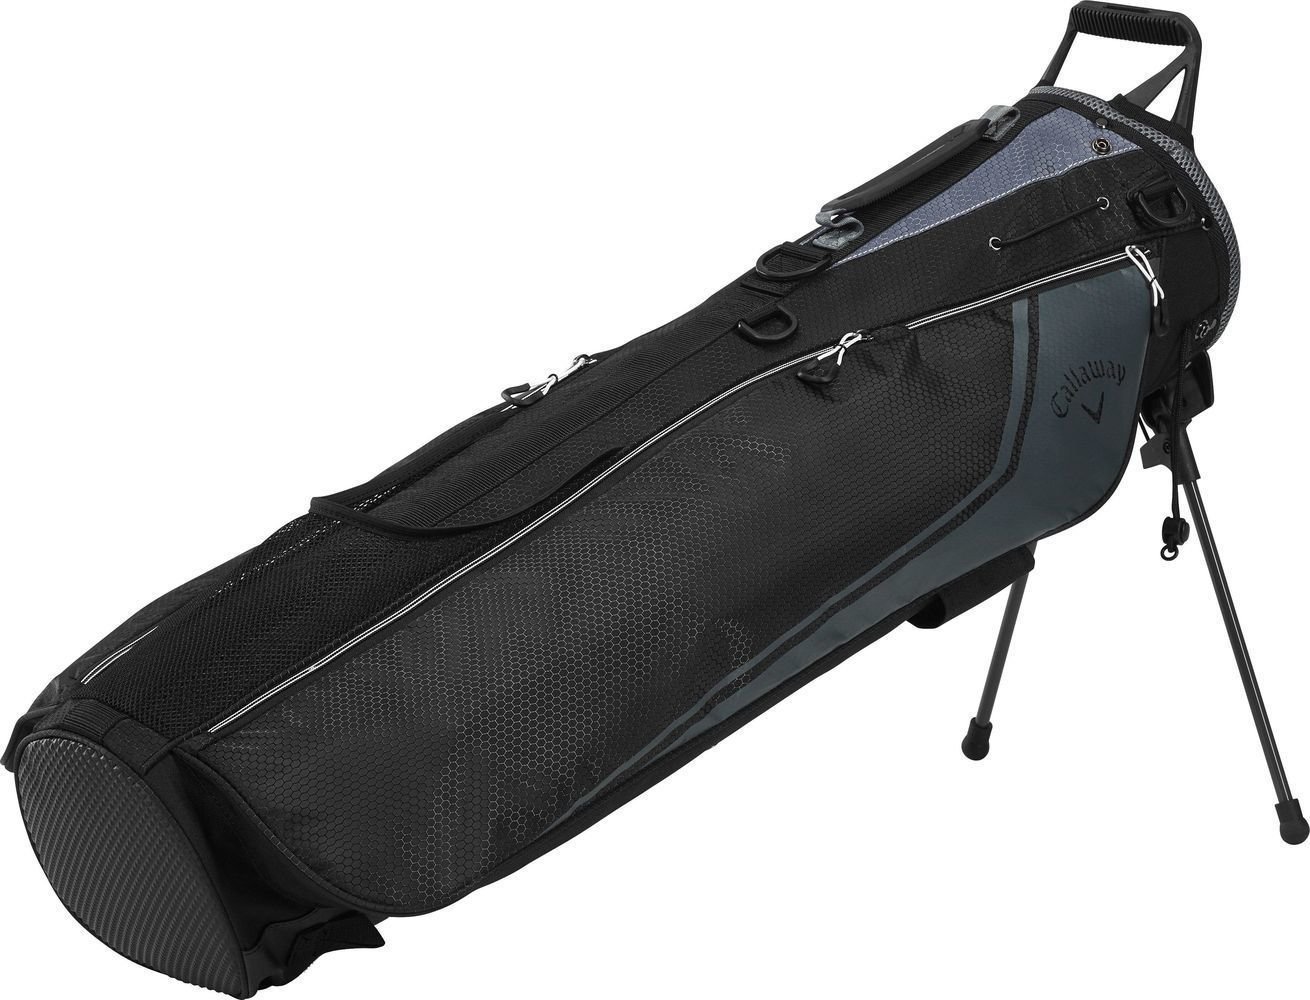 Sac de golf Callaway Carry+ Double Strap Black/Charcoal Sac de golf